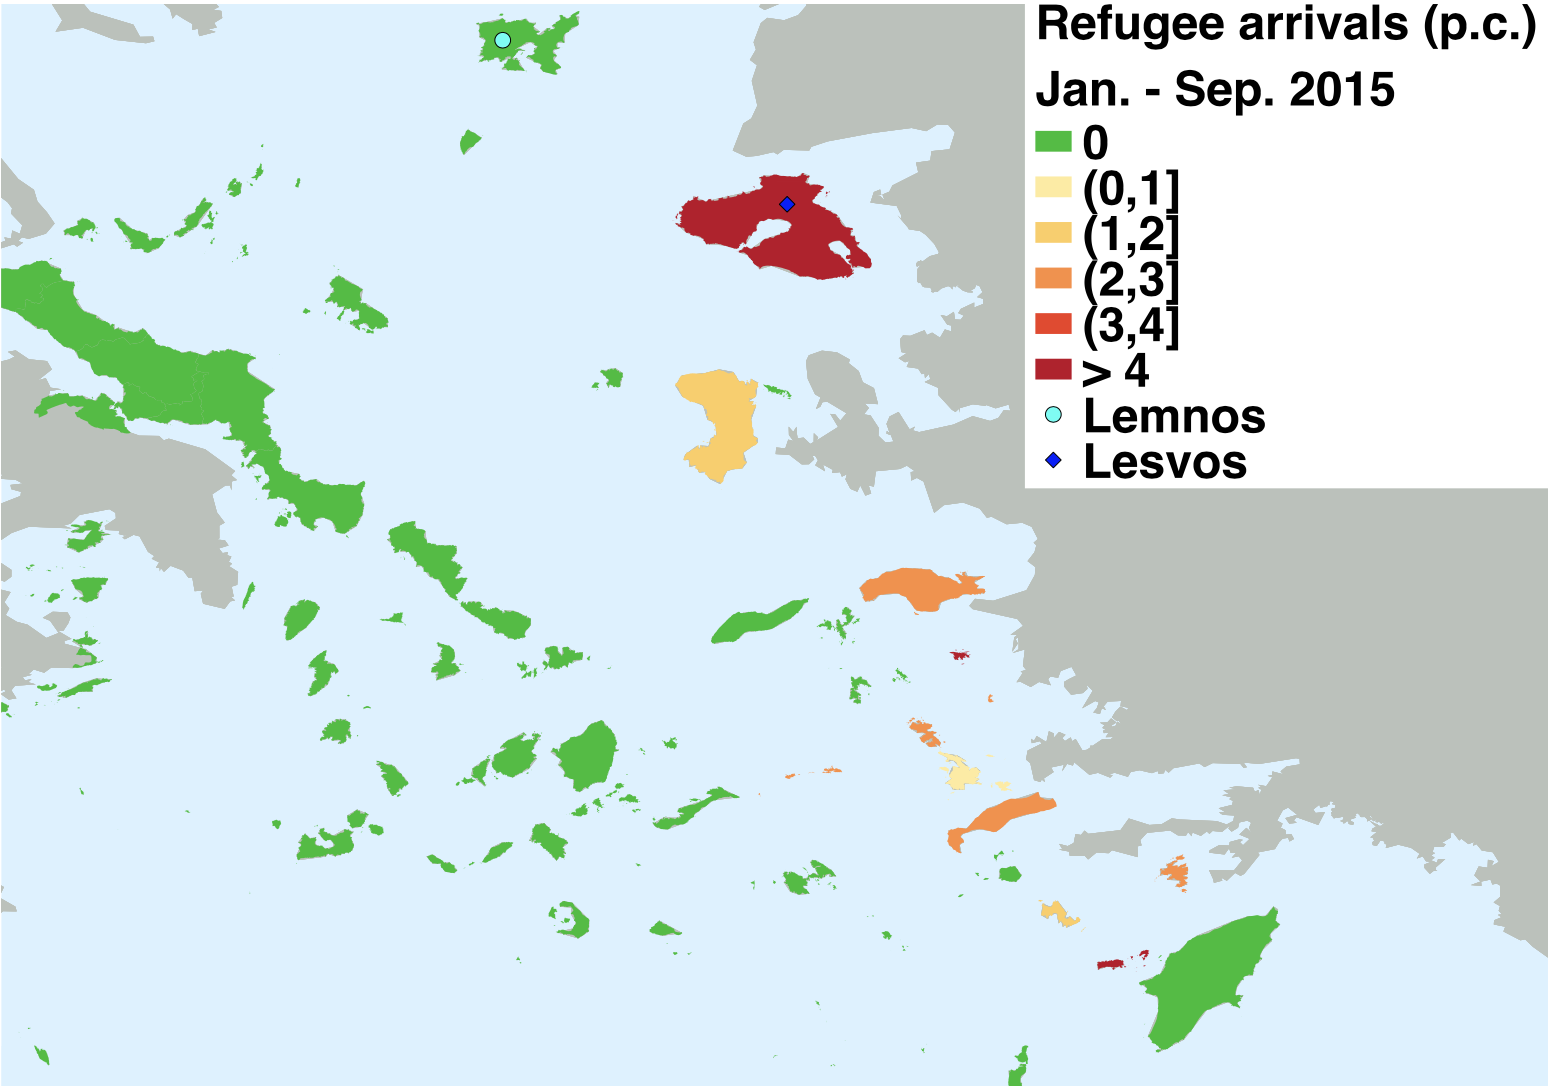 Island proximity to the Turkish coast and refugees per capita